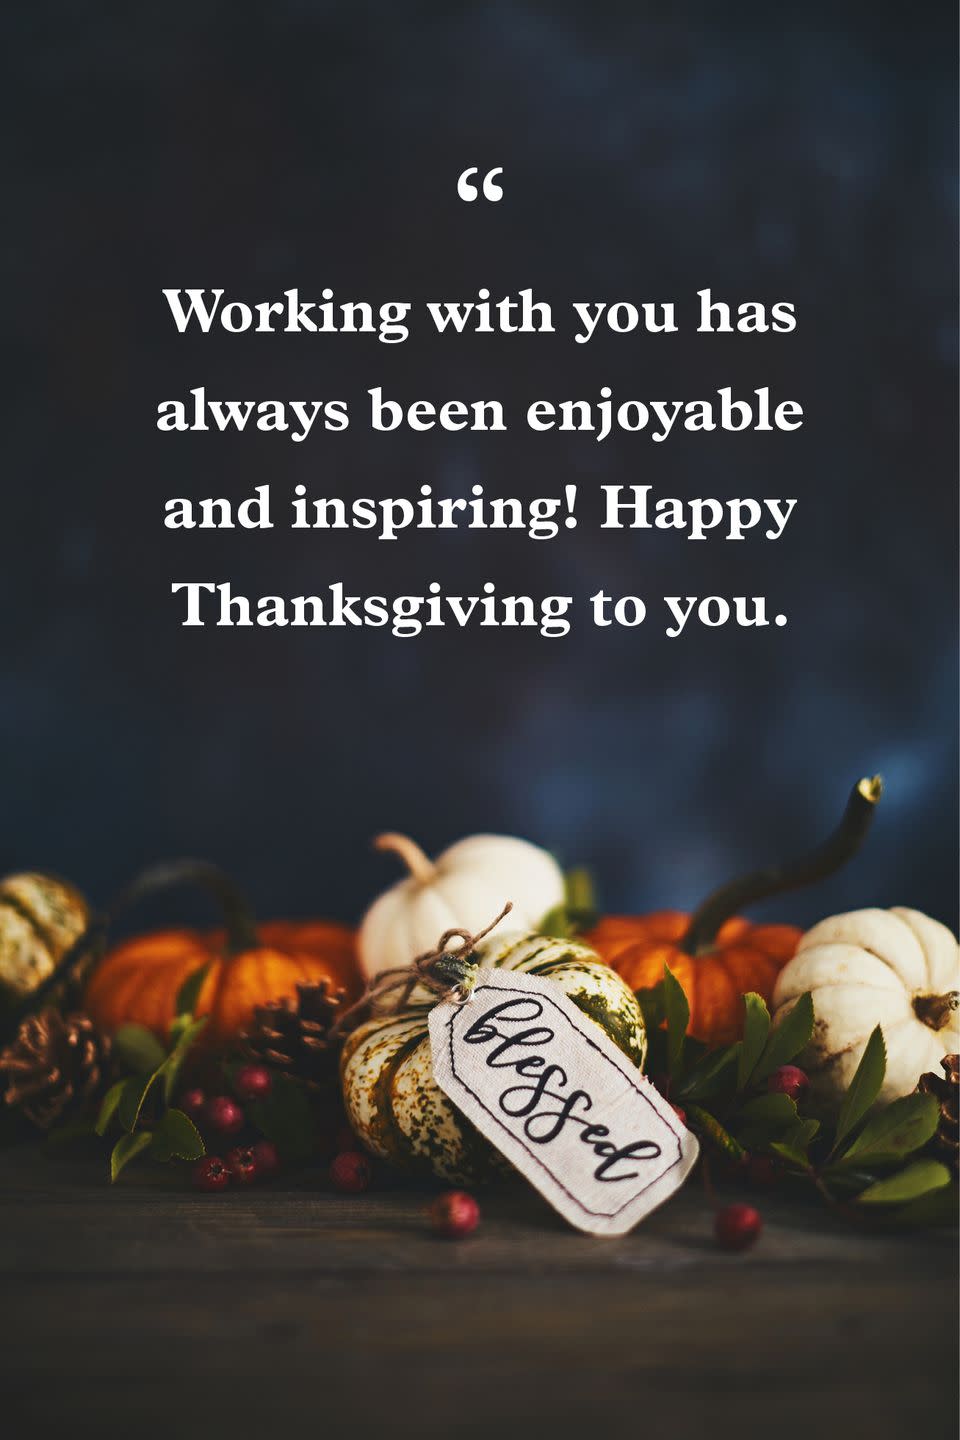 thanksgiving greetings